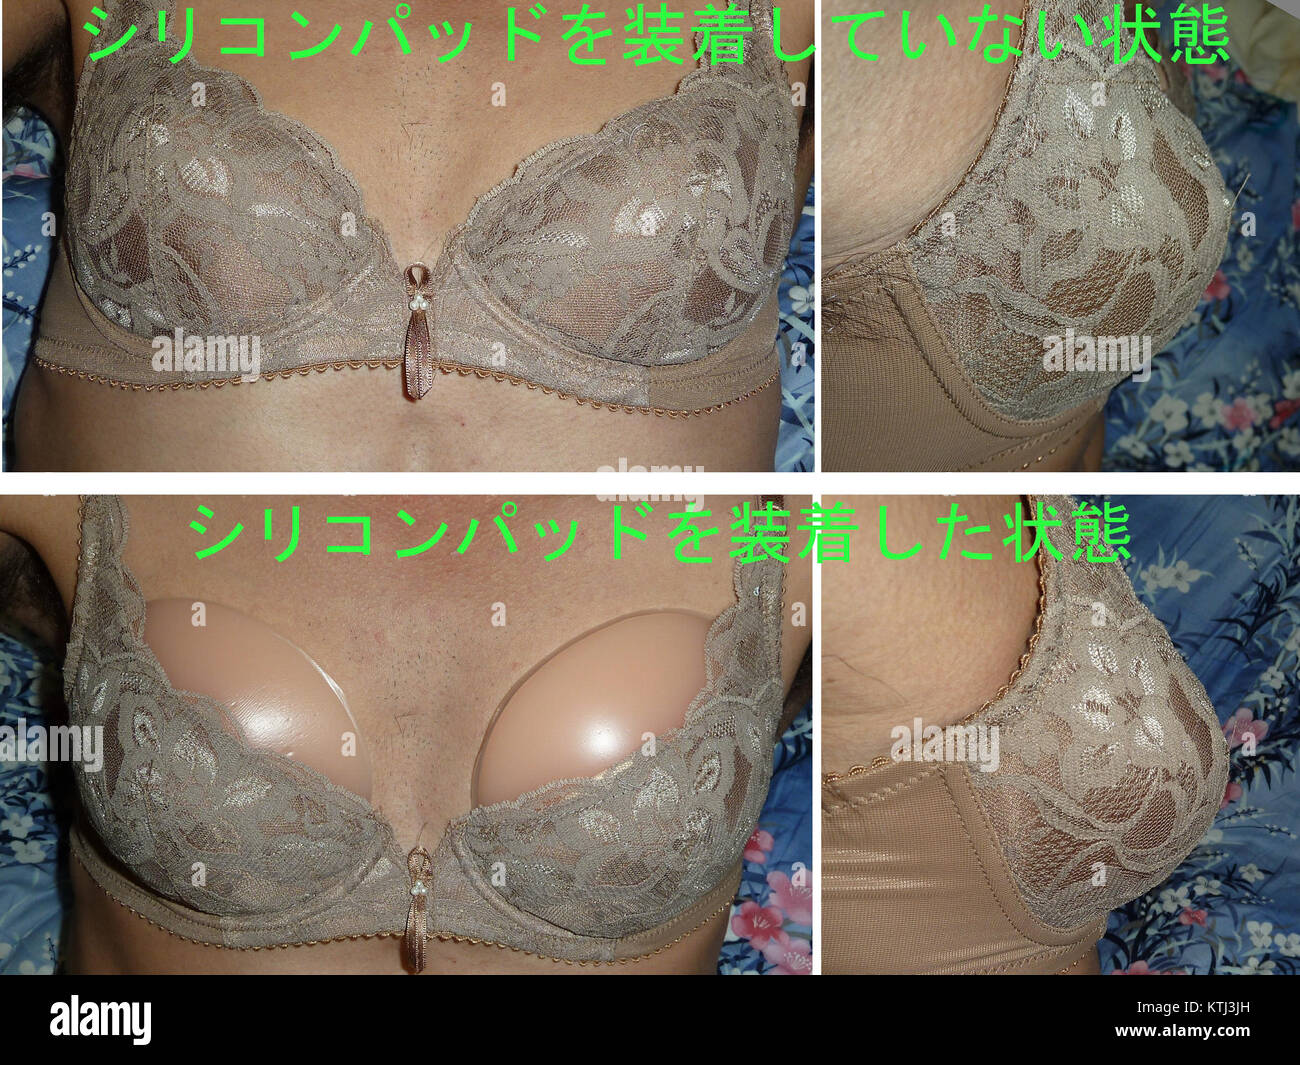 B75 bra with silicon pad Stock Photo - Alamy